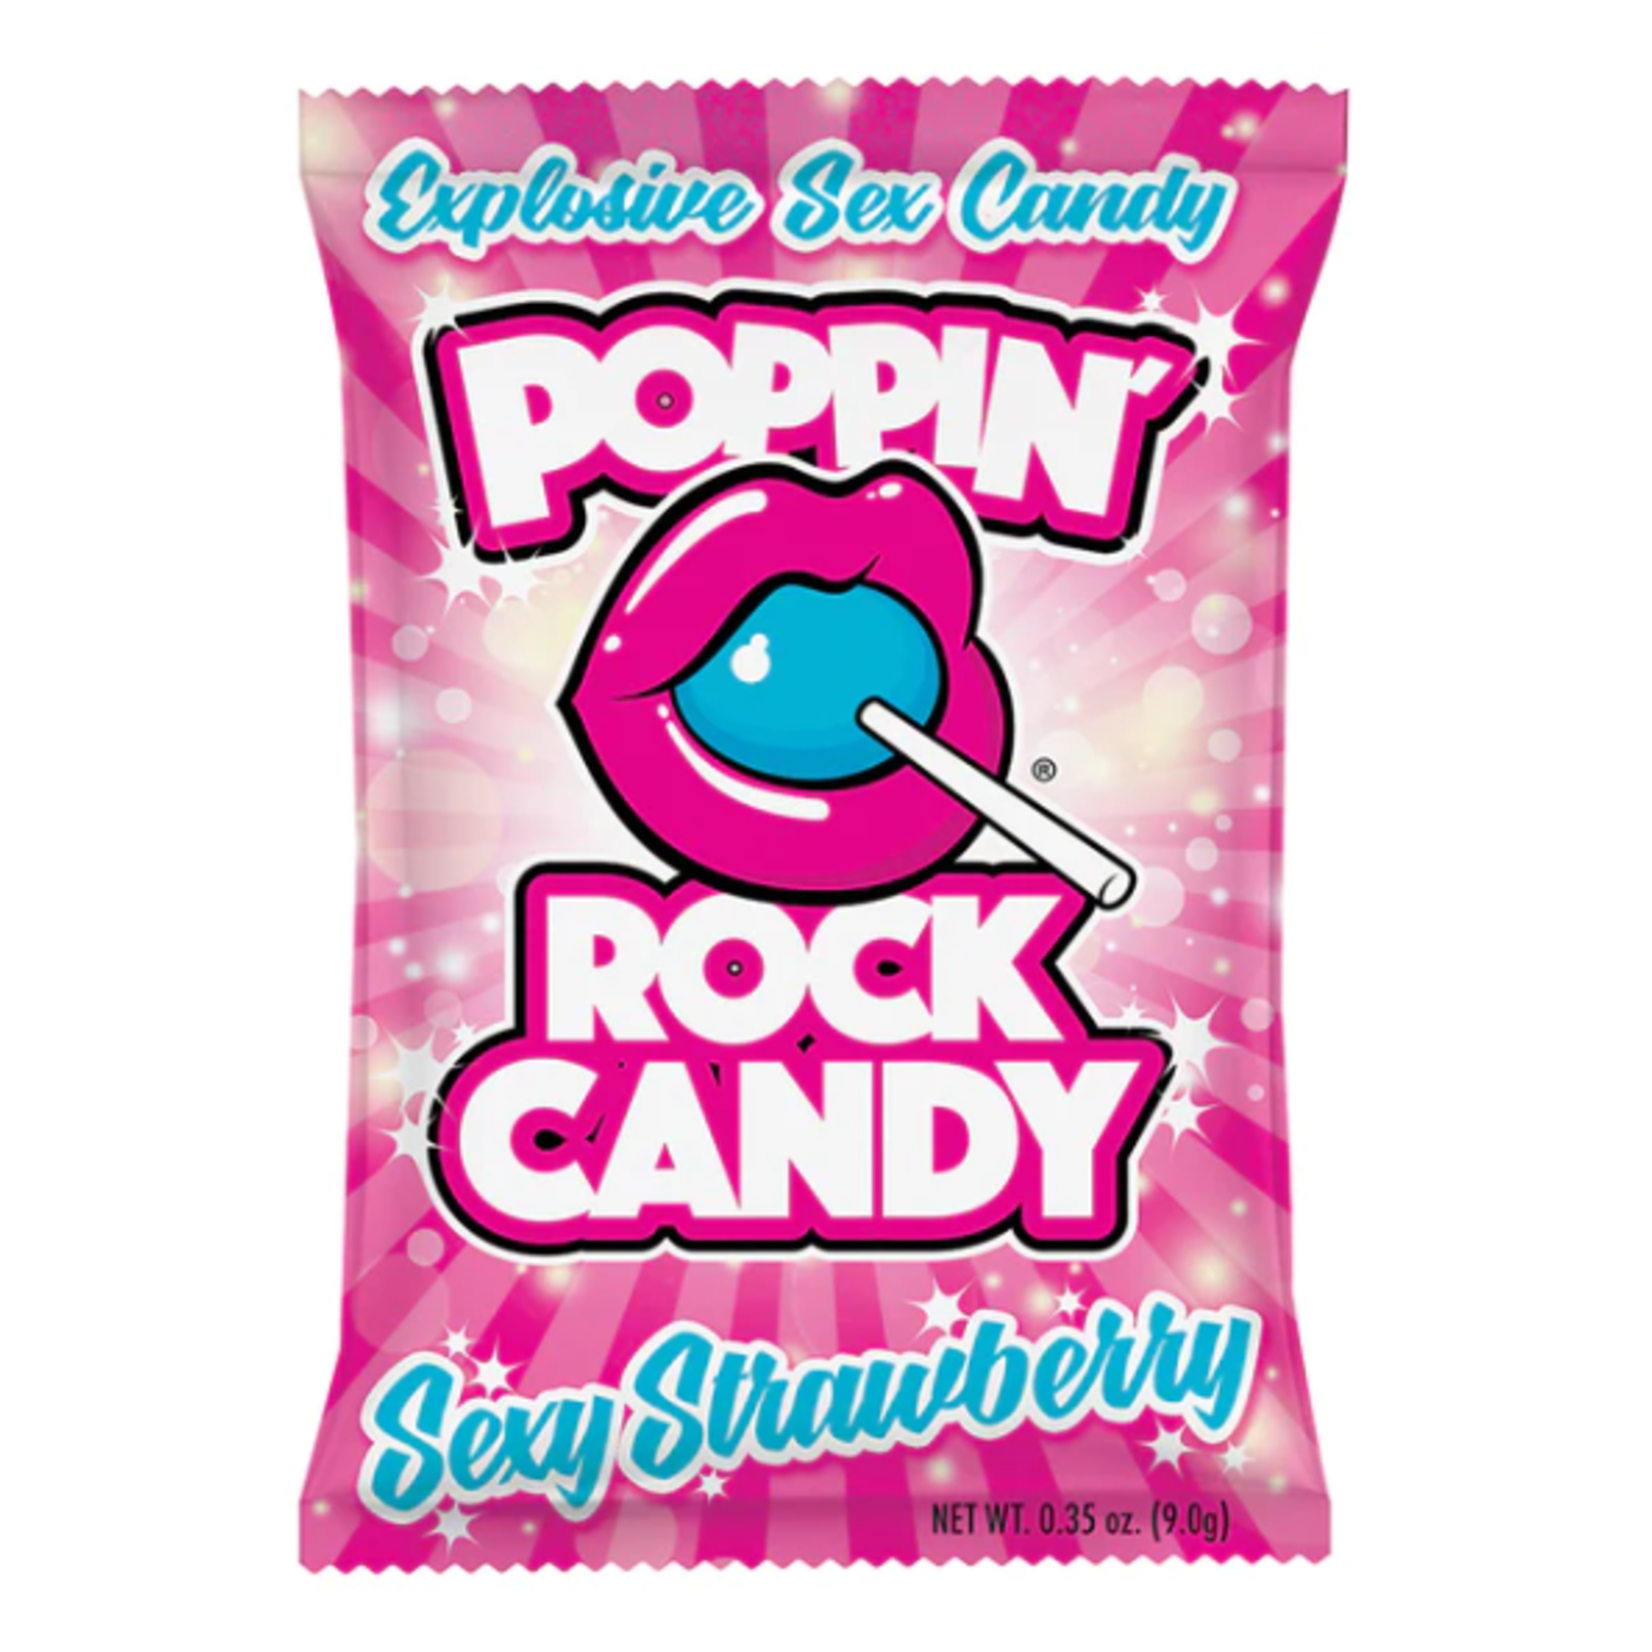 ROCKCANDY - POPPING ROCK CANDY SEXY STRAWBERRRY